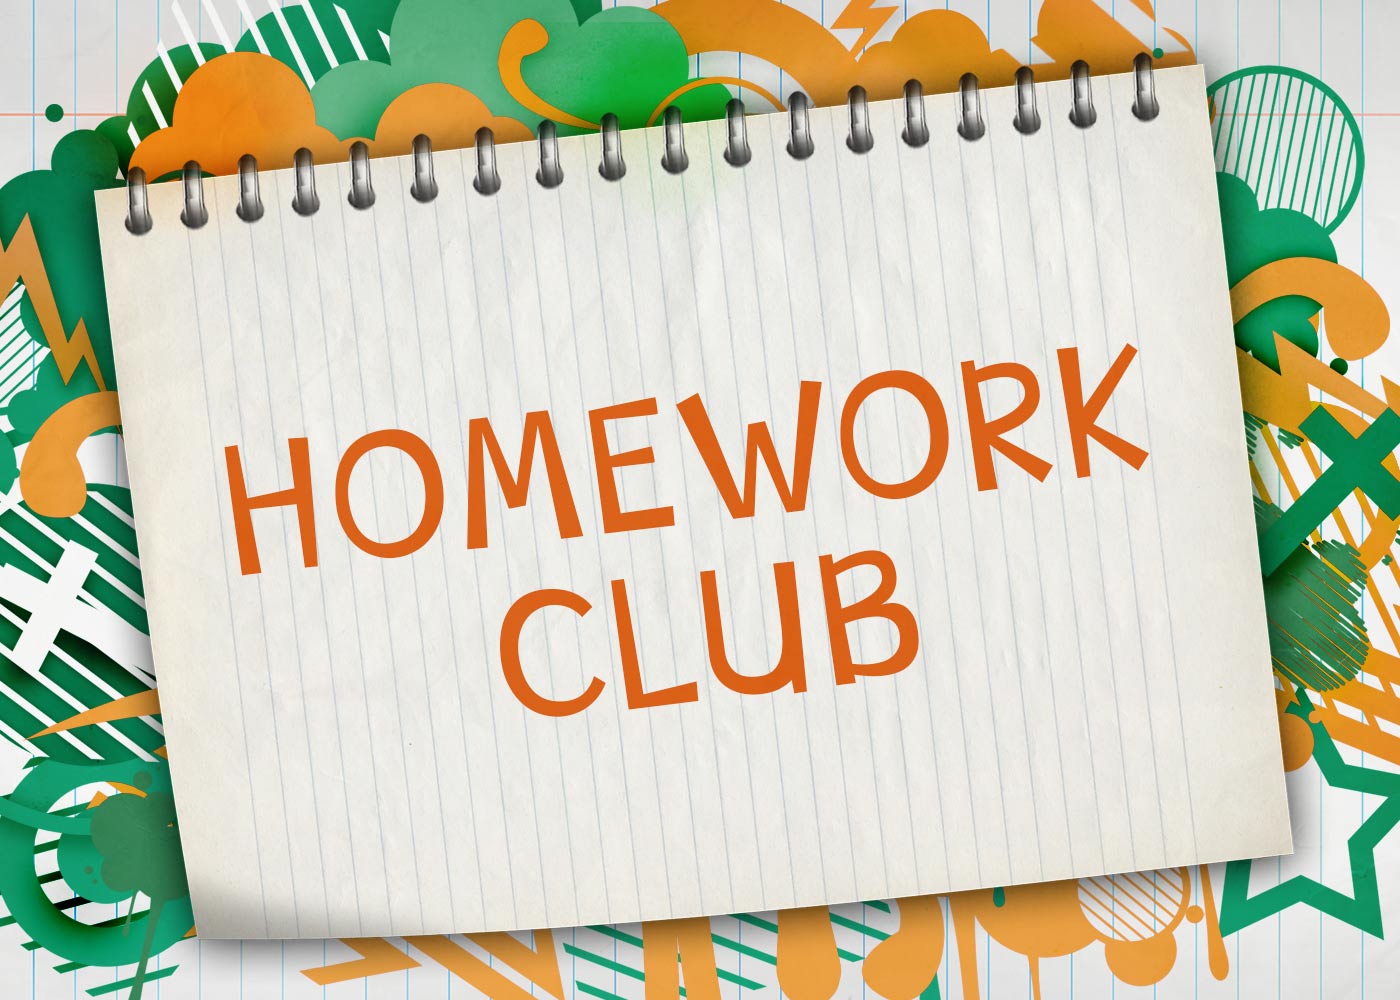 of homework club